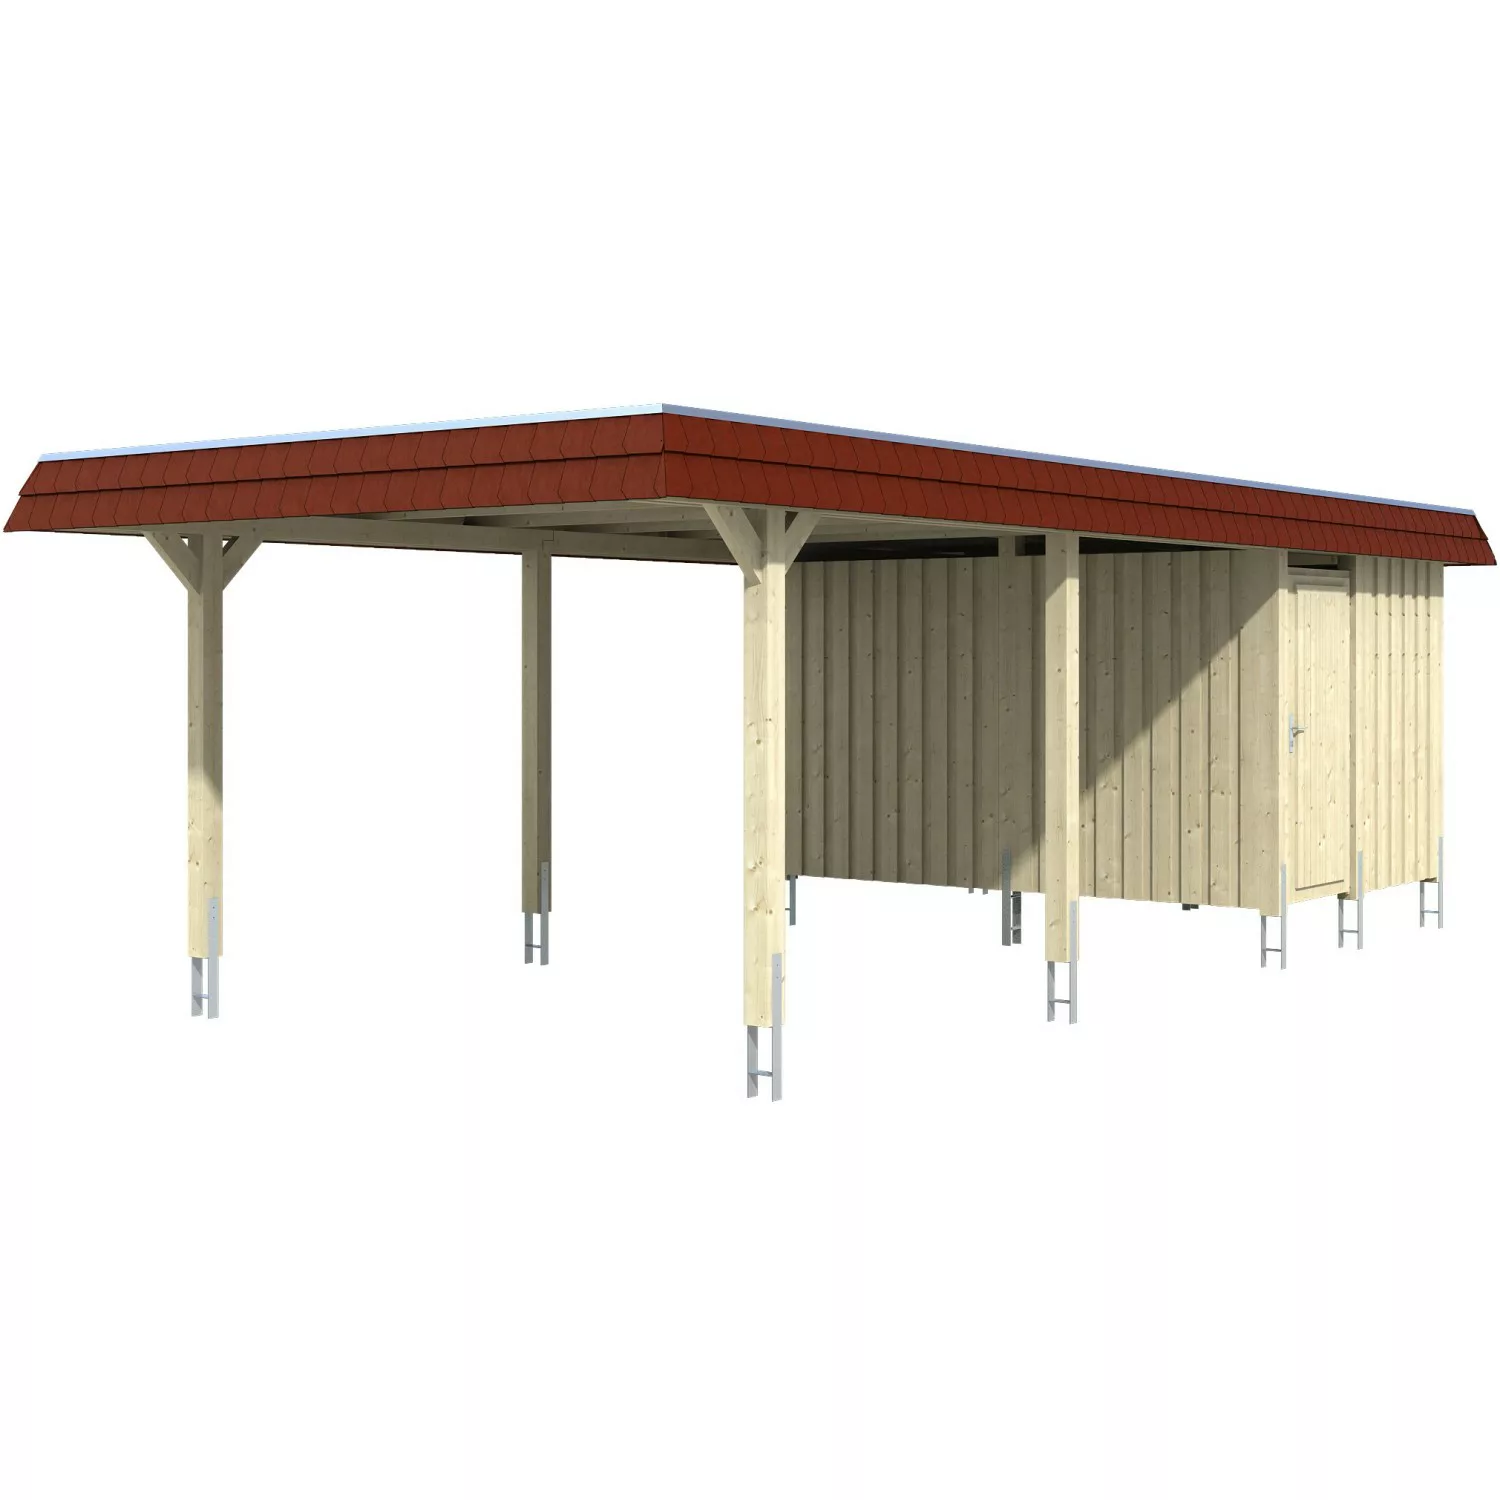 Skan Holz Carport Wendland Eiche hell + Anbau 409 x 870 cm Alu-Dach Blende günstig online kaufen